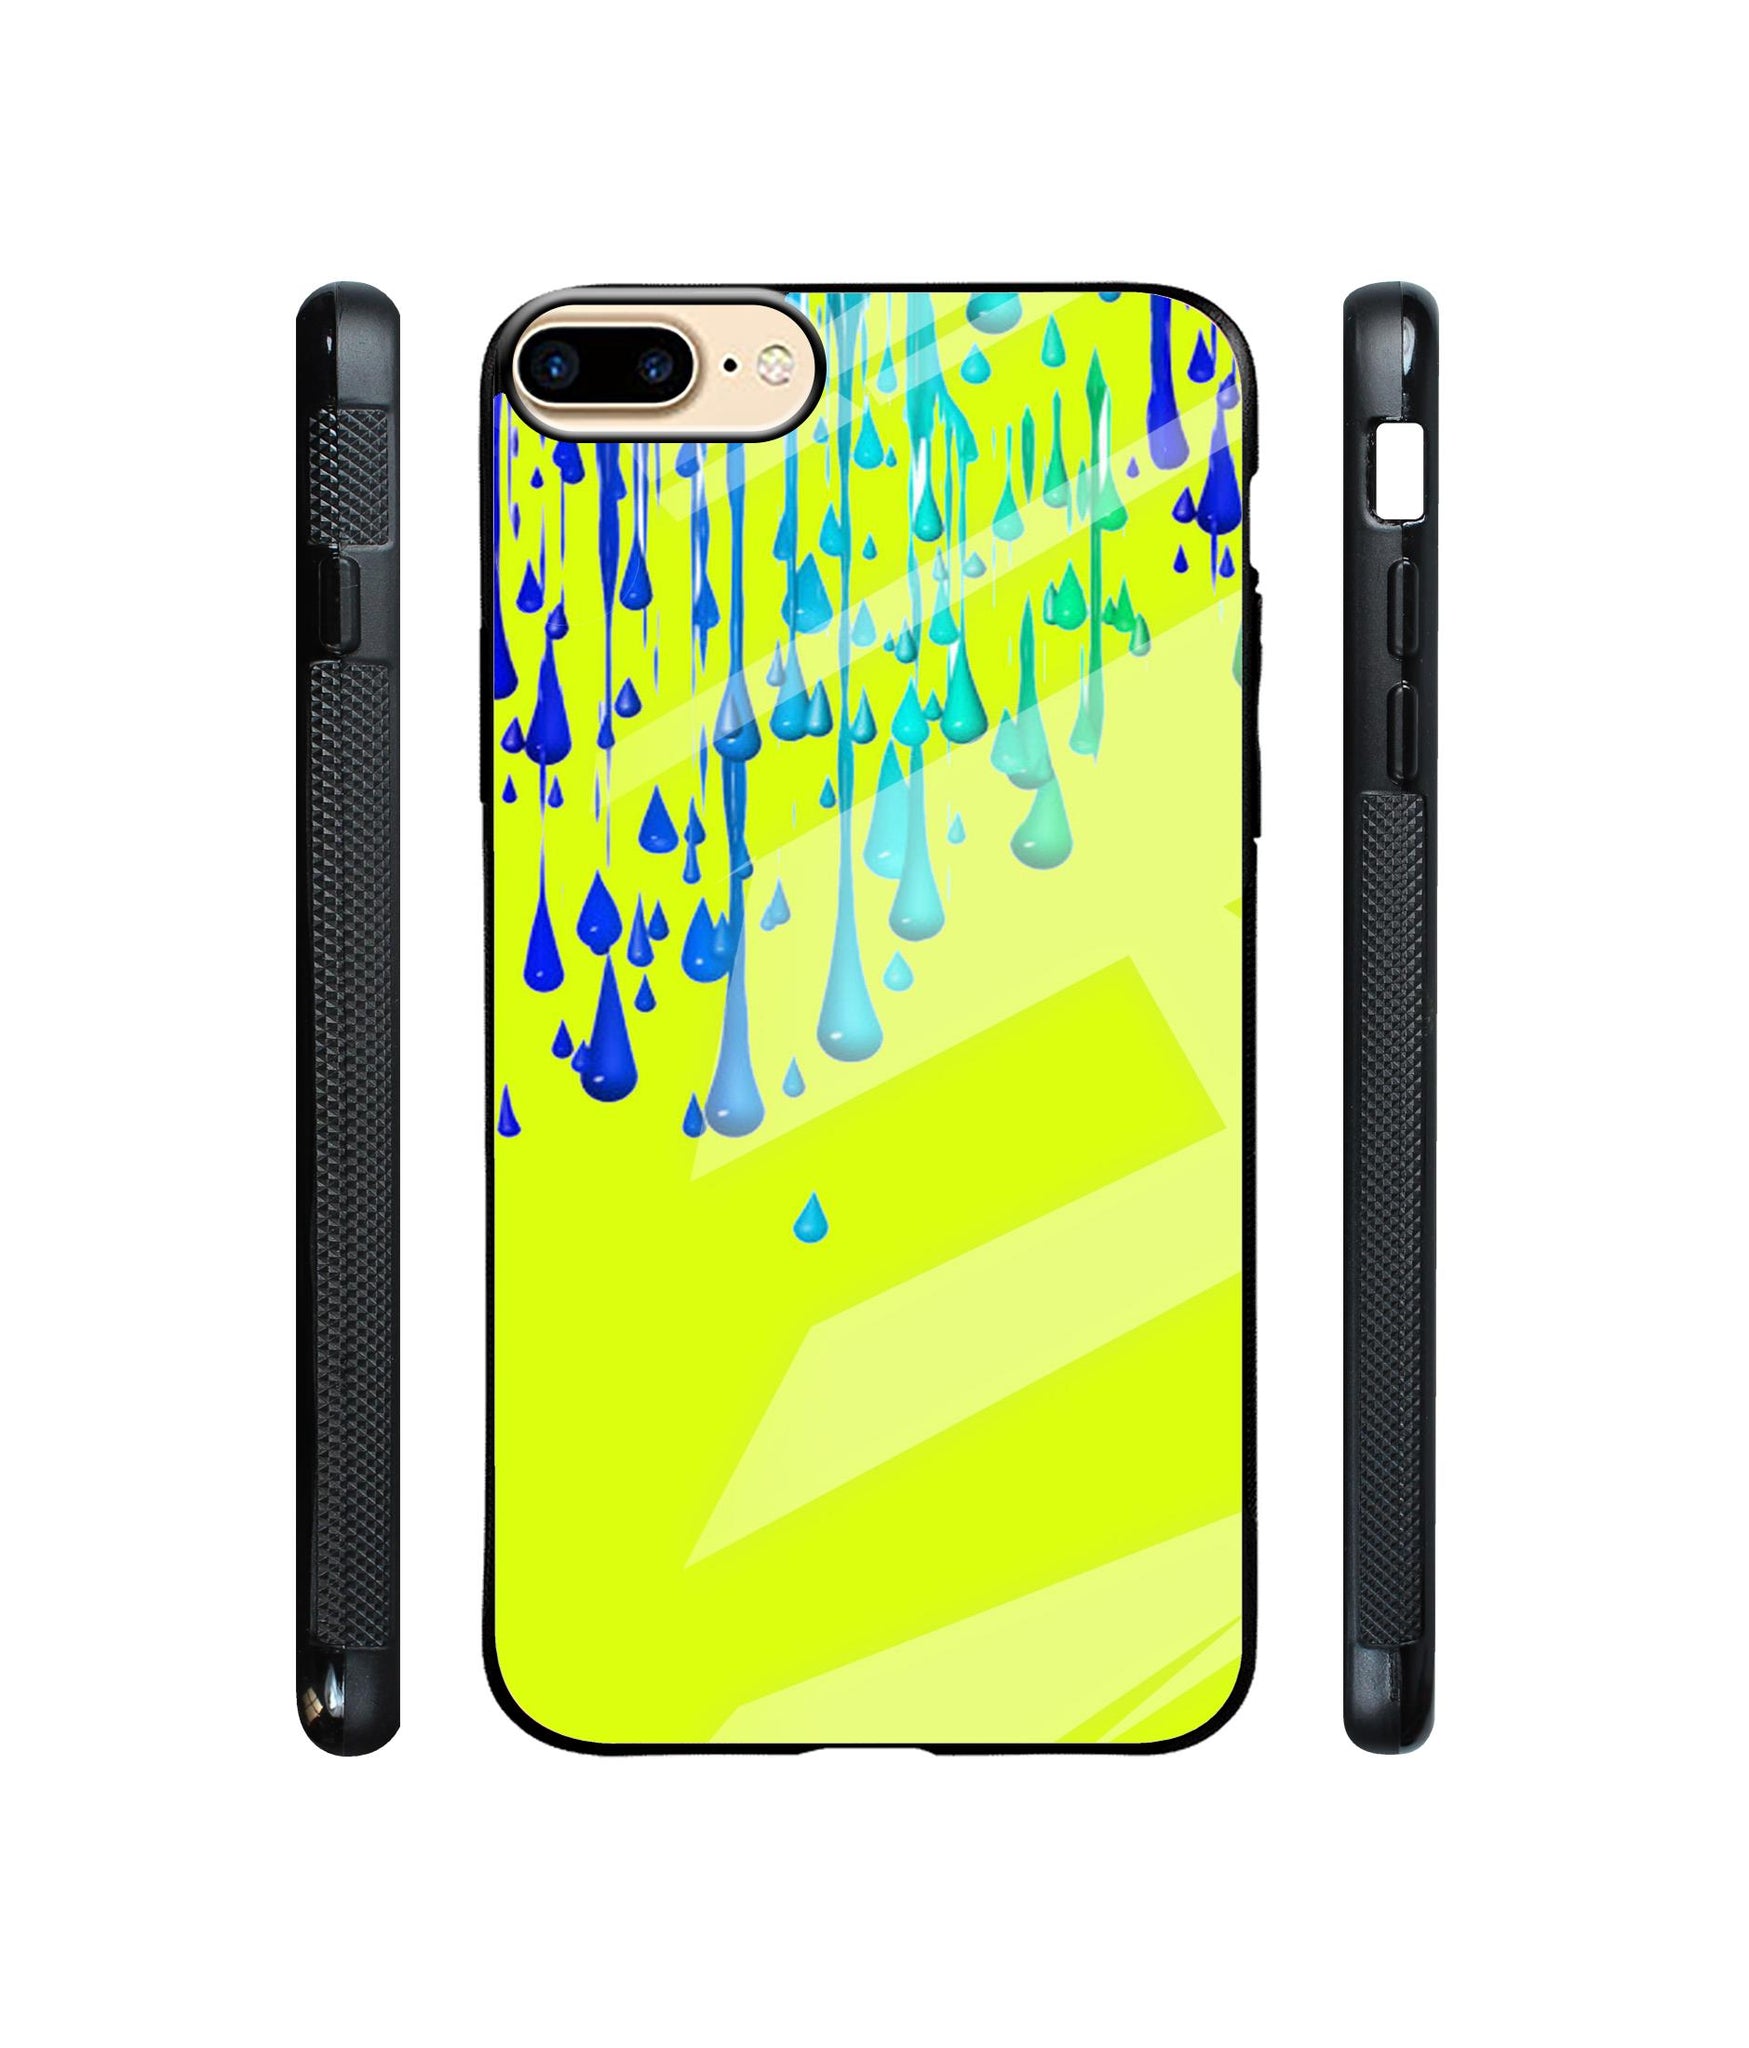 Neon Paint Designer Printed Glass Cover for Apple iPhone 7 Plus / iPhone 8 Plus